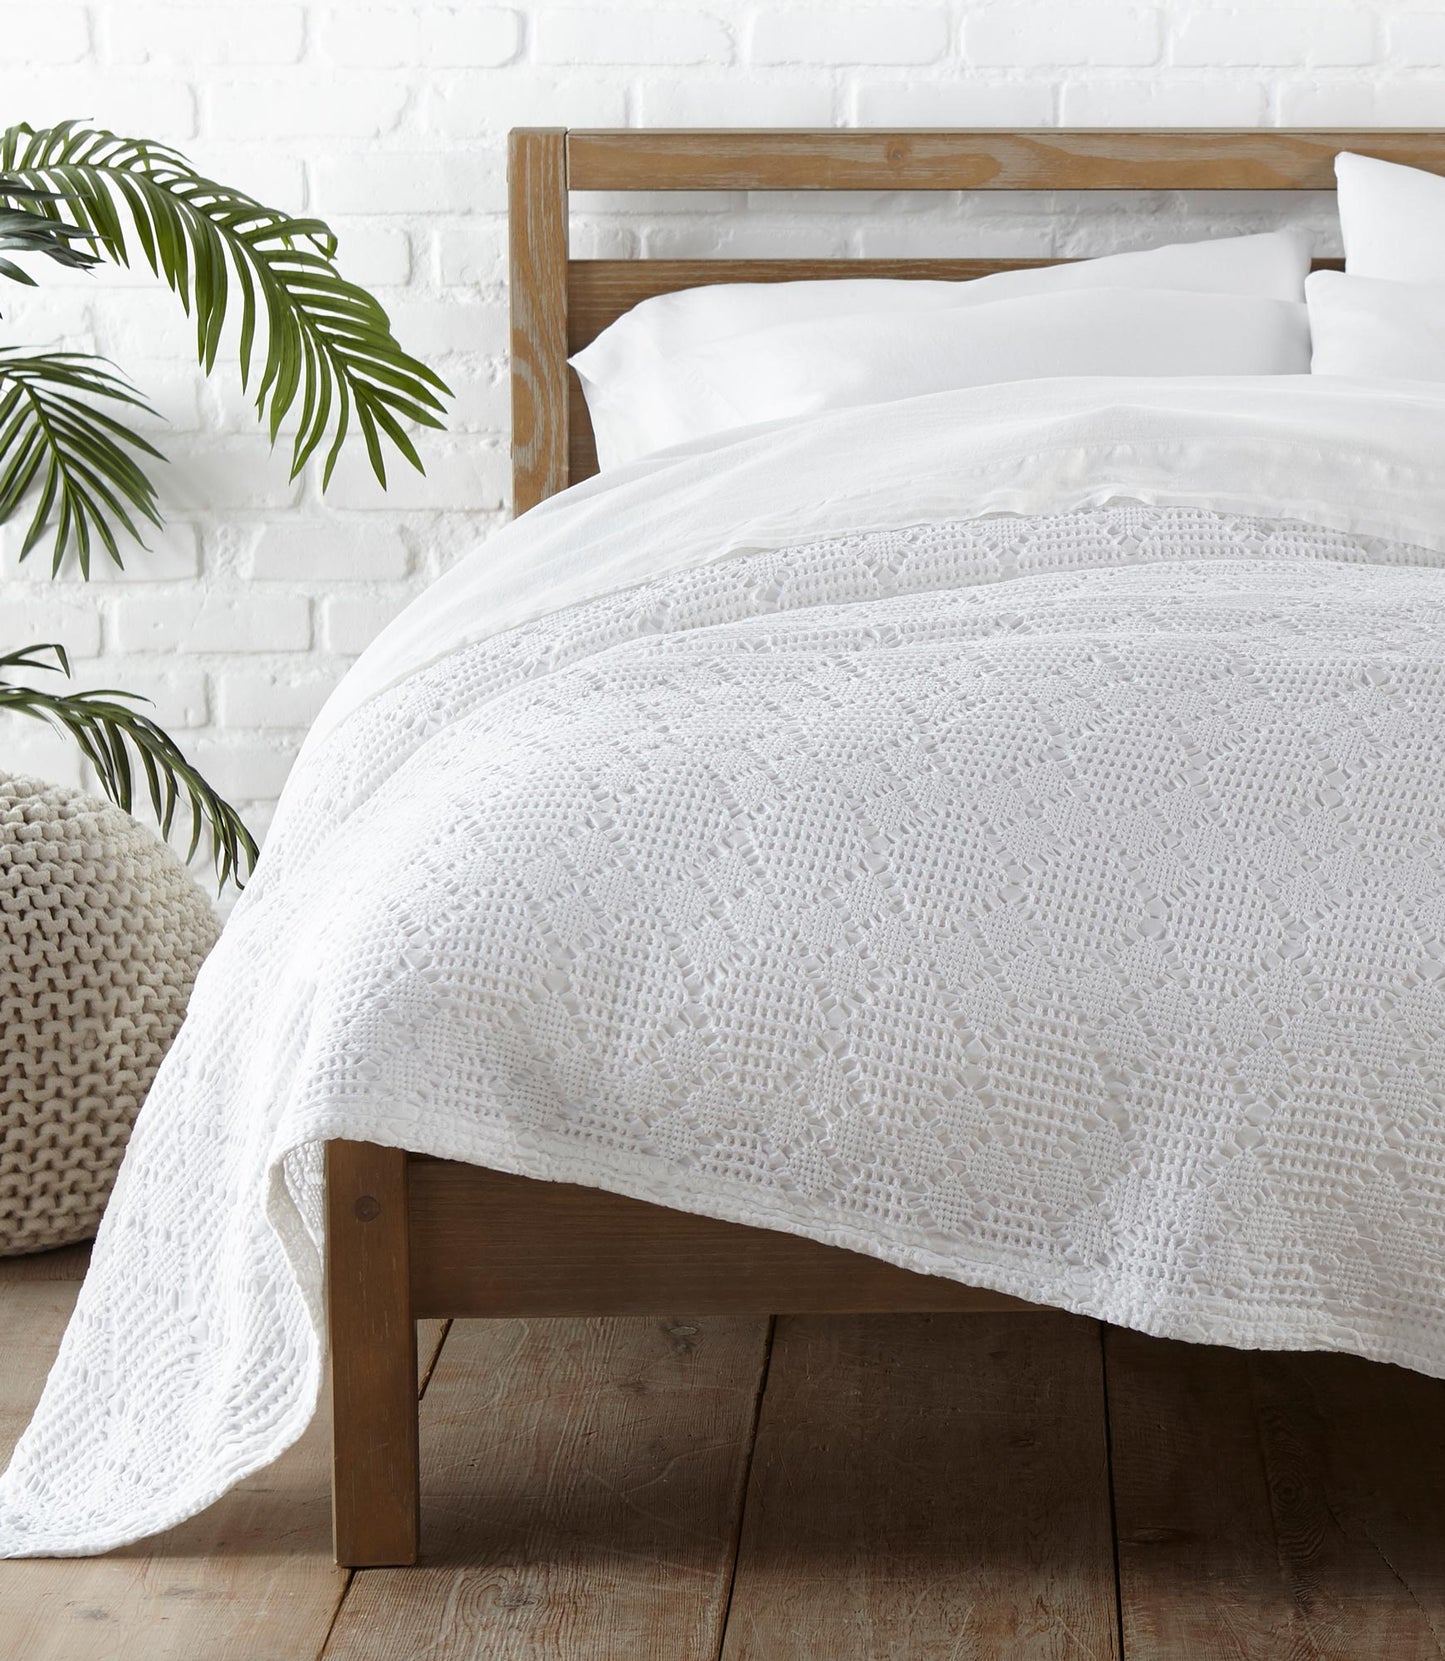 Textured Blanket White on bed